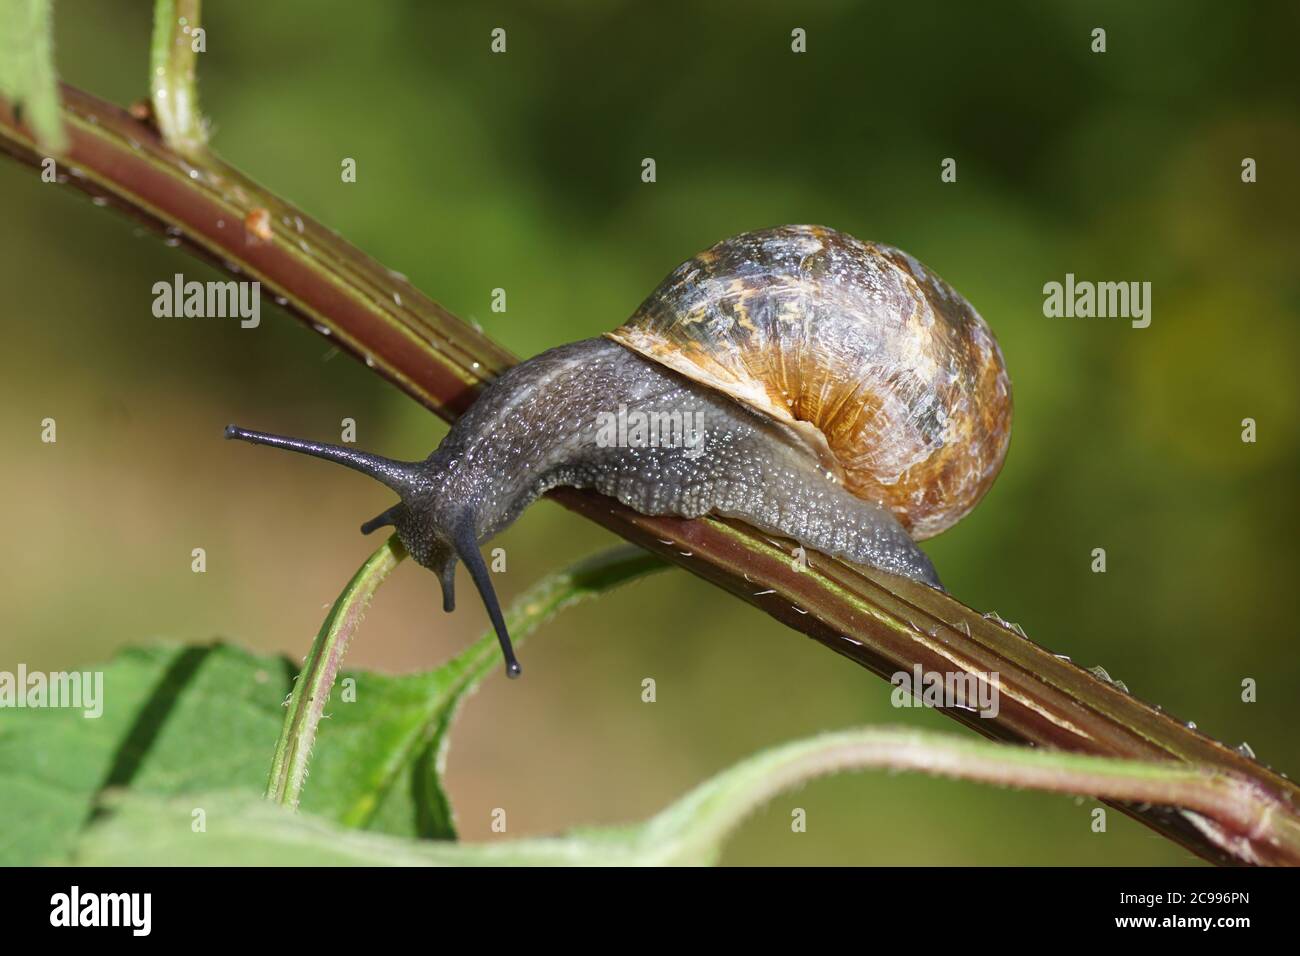 Garden snail (Cornu aspersum) crawling on a stem of a plant. Family land snails ( Helicidae). July, in a Dutch garden. Stock Photo